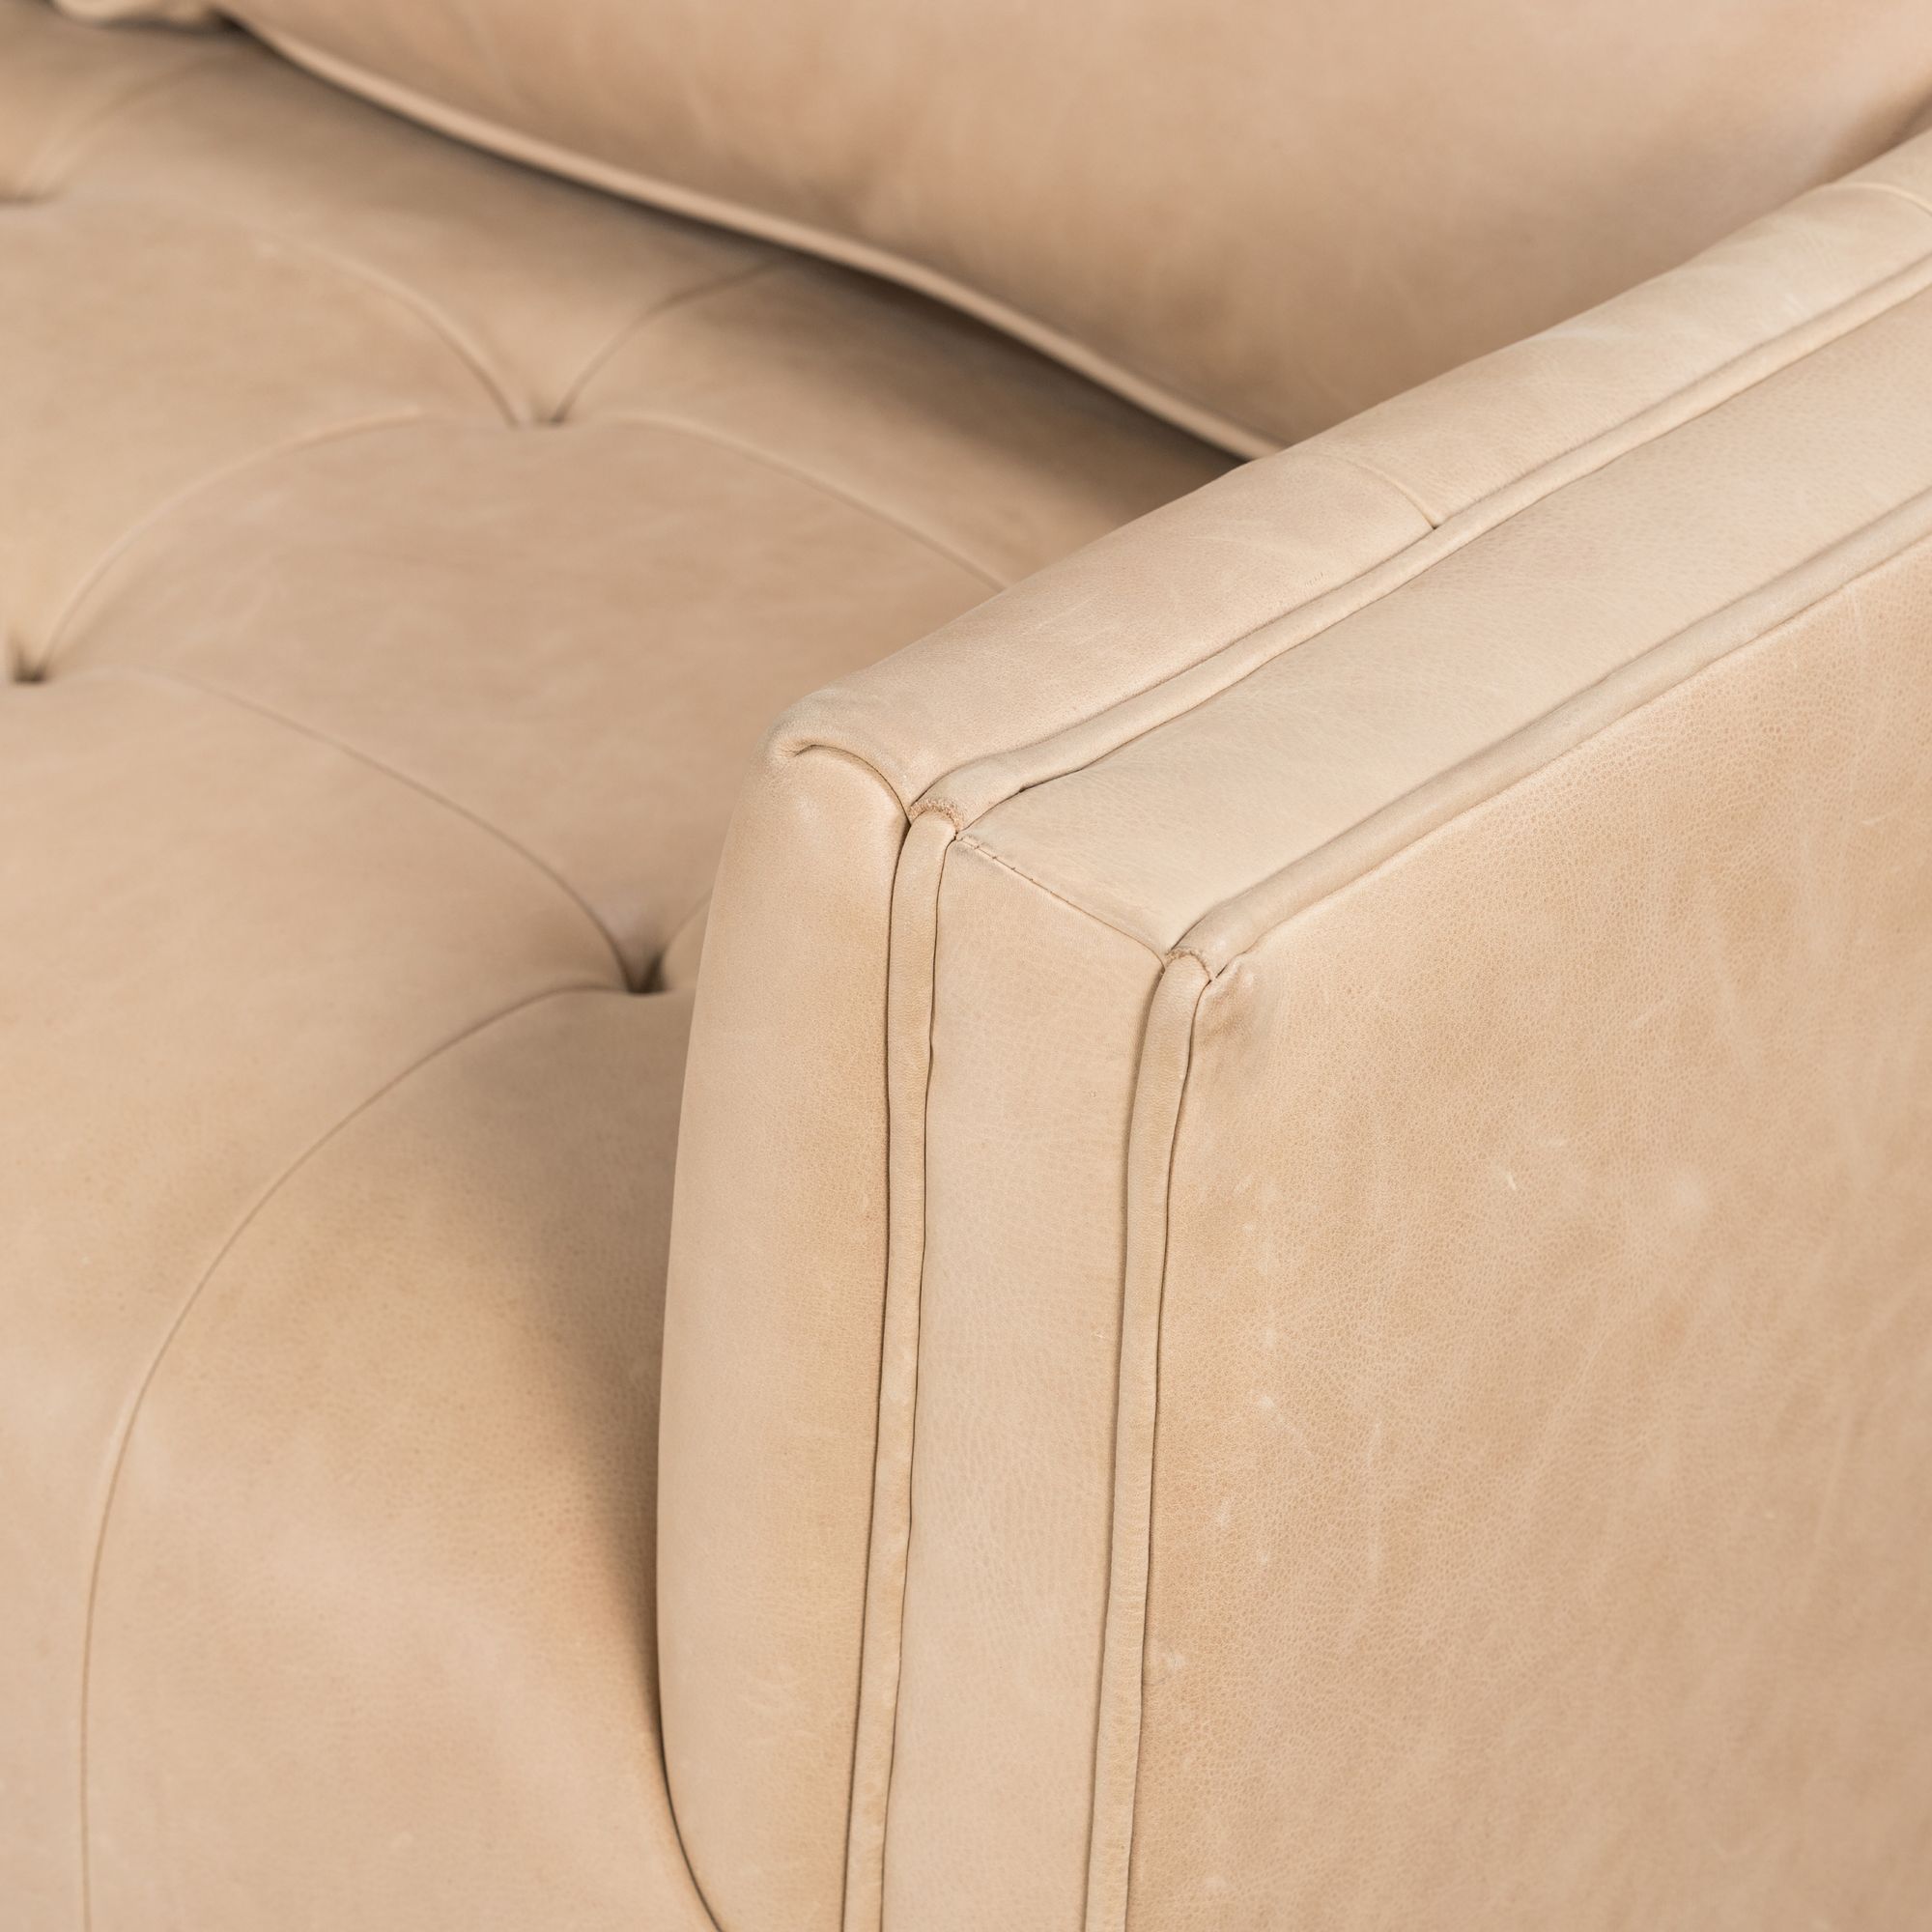 Zinea Mobile Armrest for Loveseat - Leather beige